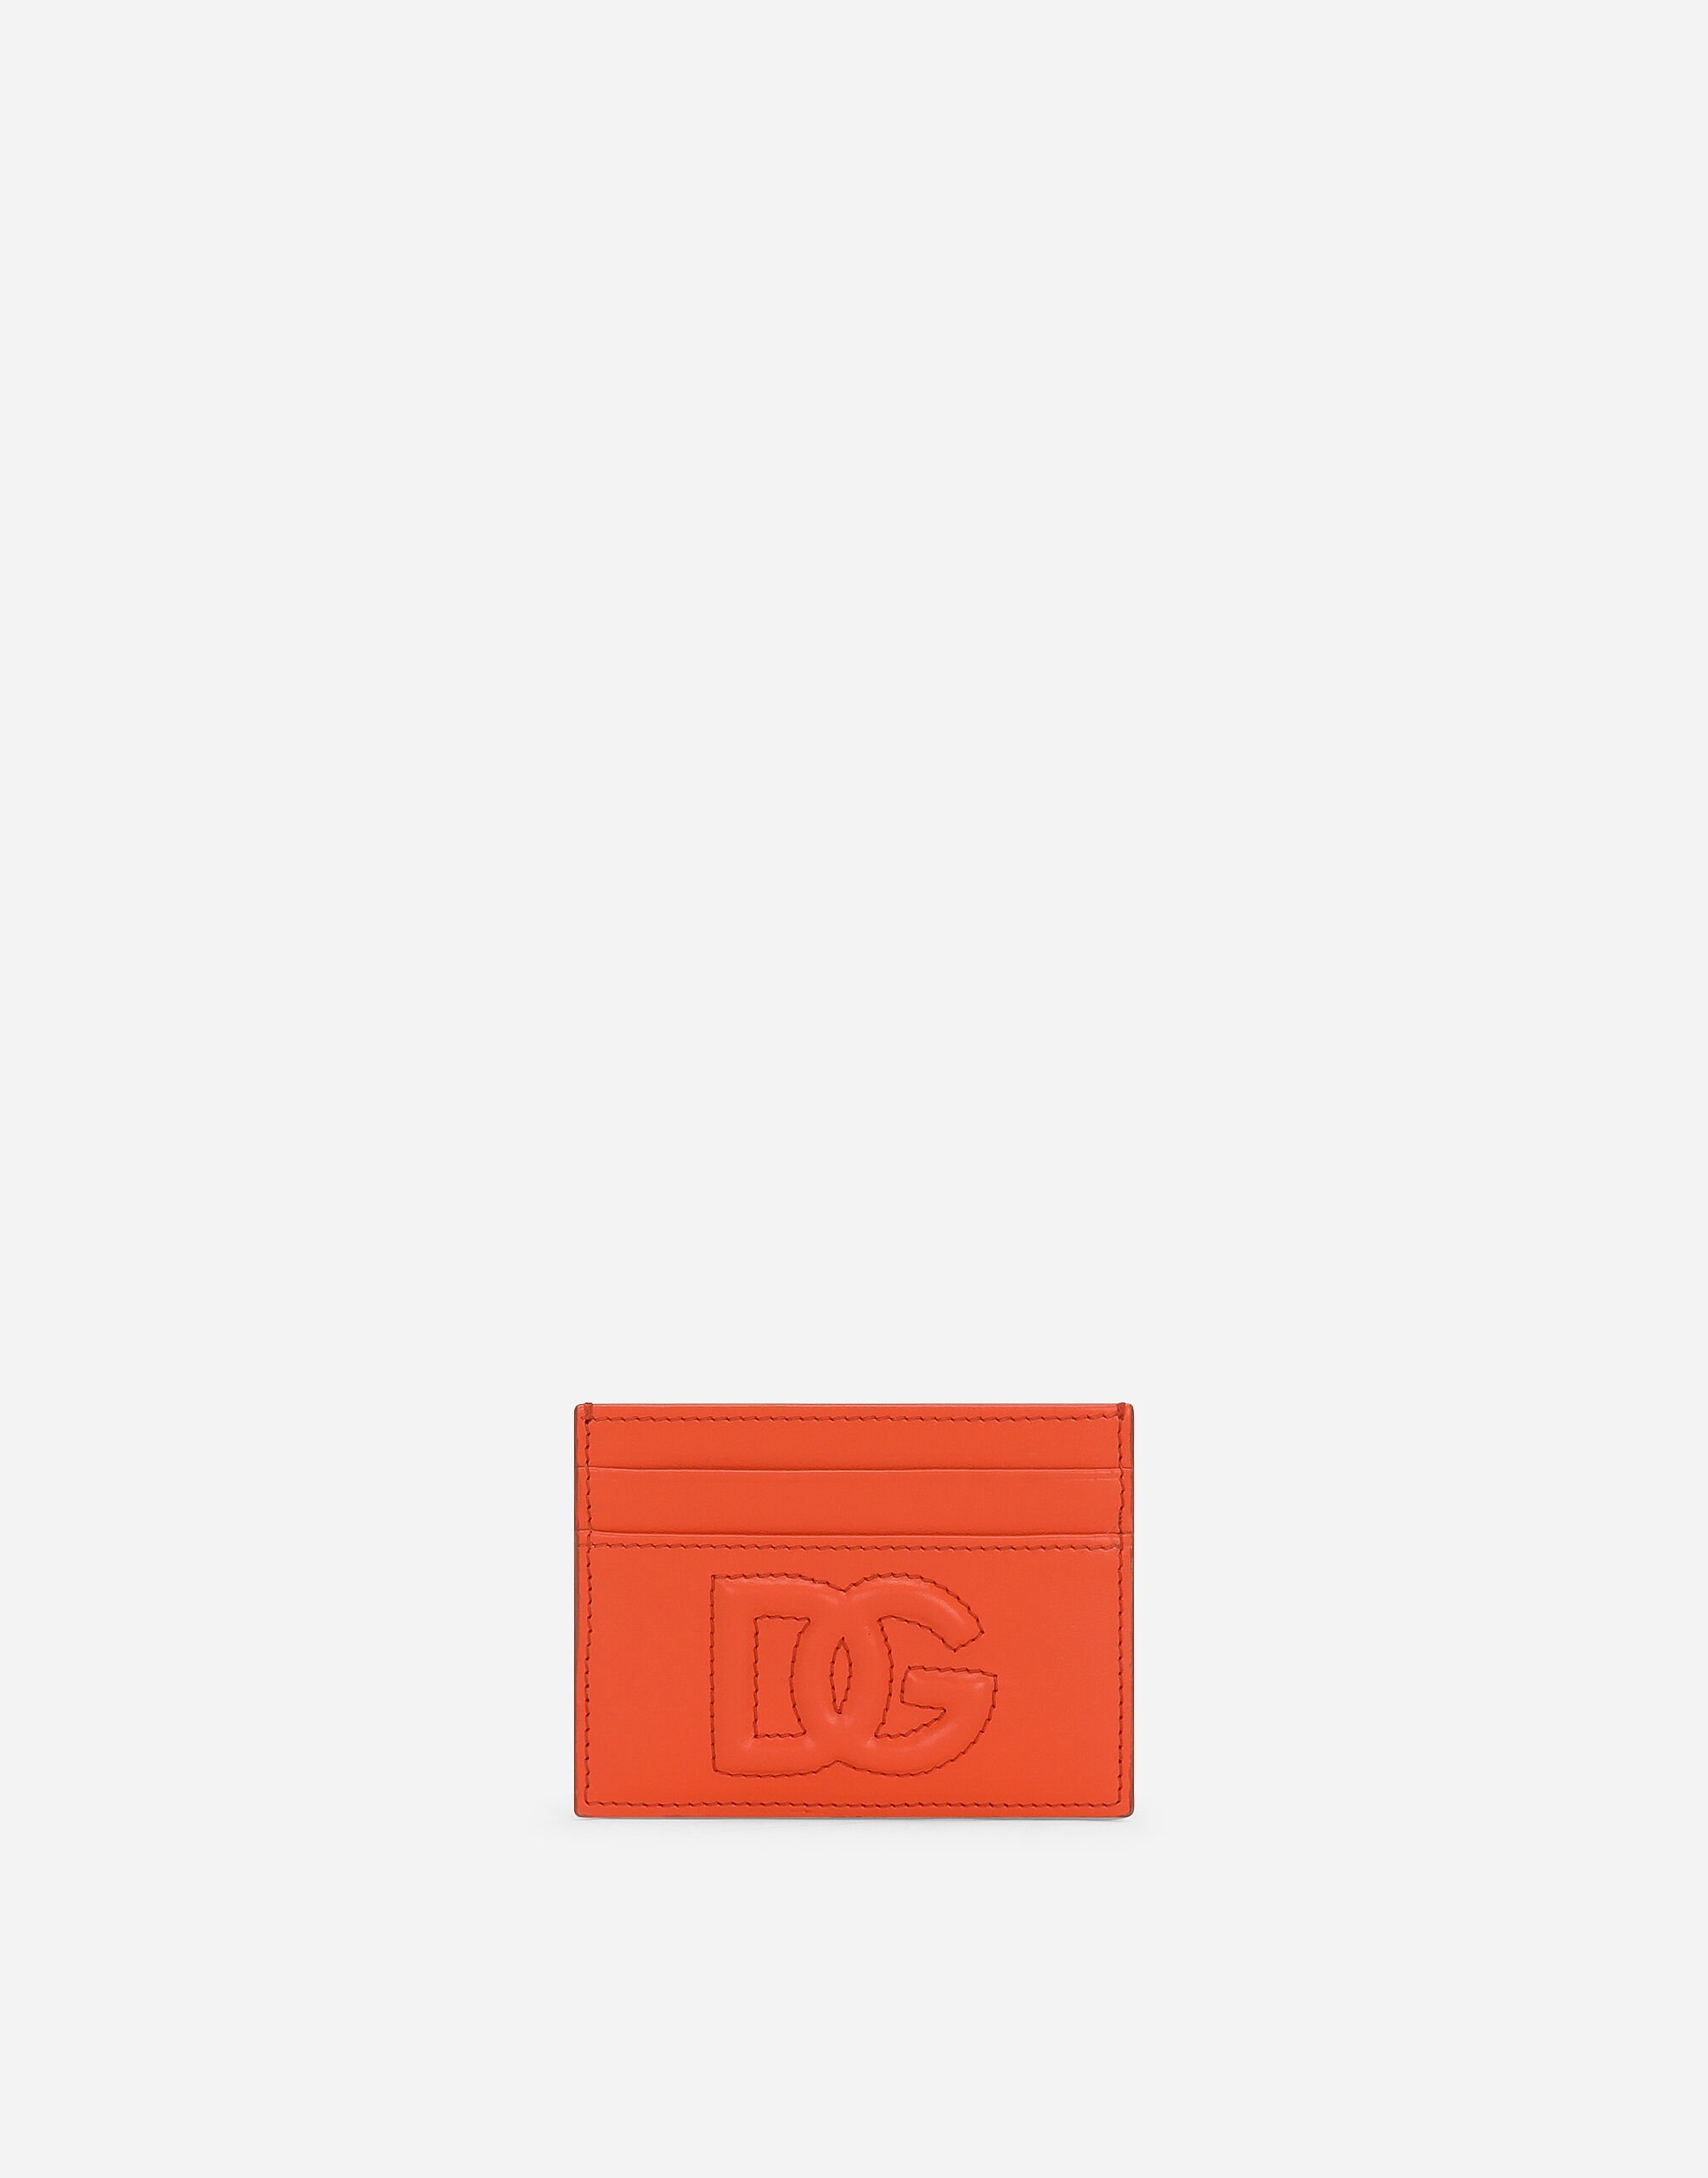 Dolce & Gabbana DG Logo カードホルダー オレンジ BI1261AS204